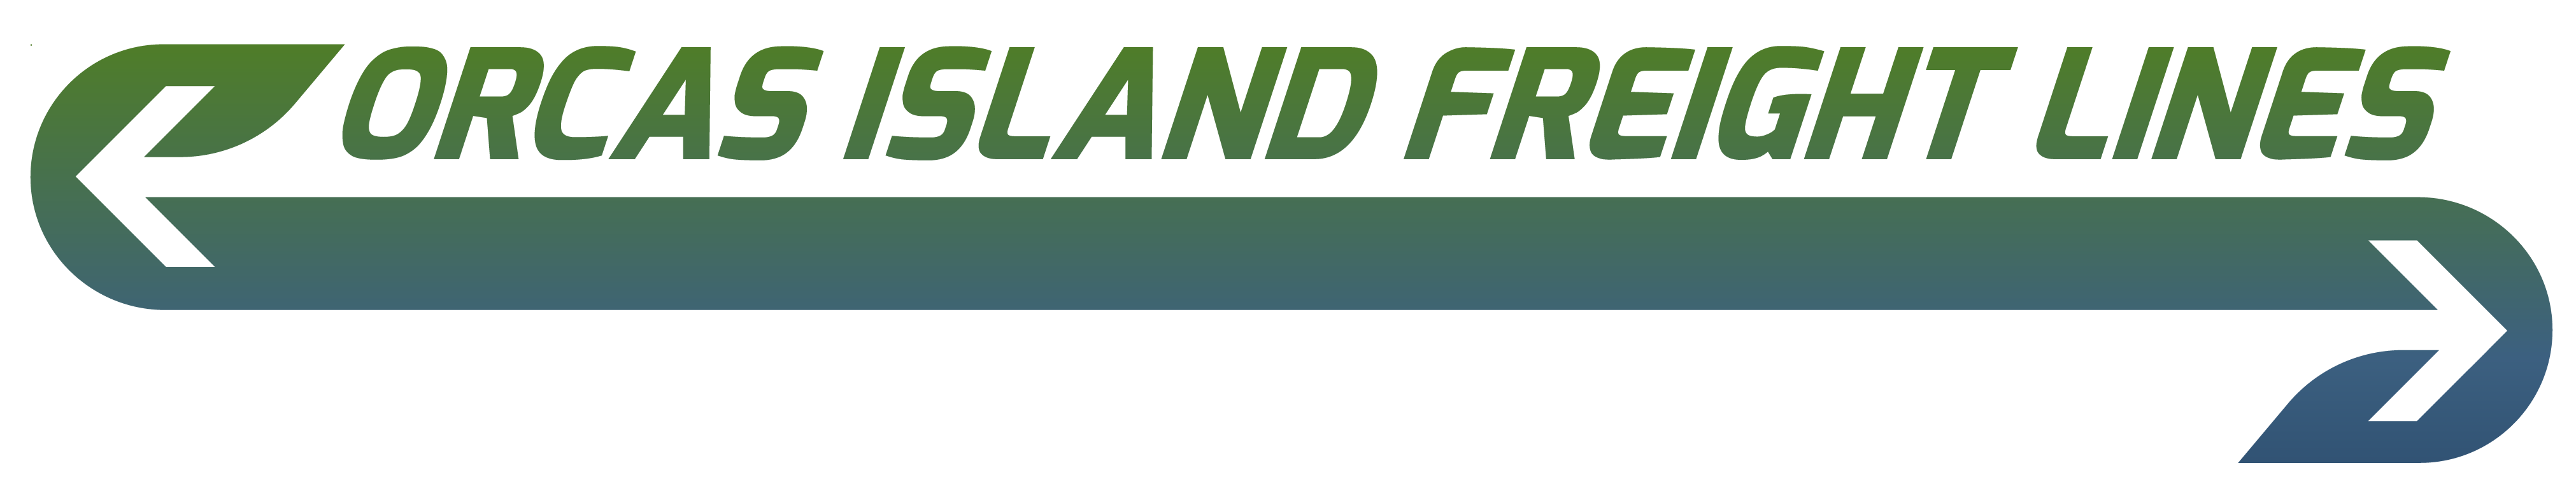 Orcas Island Freight Lines logo